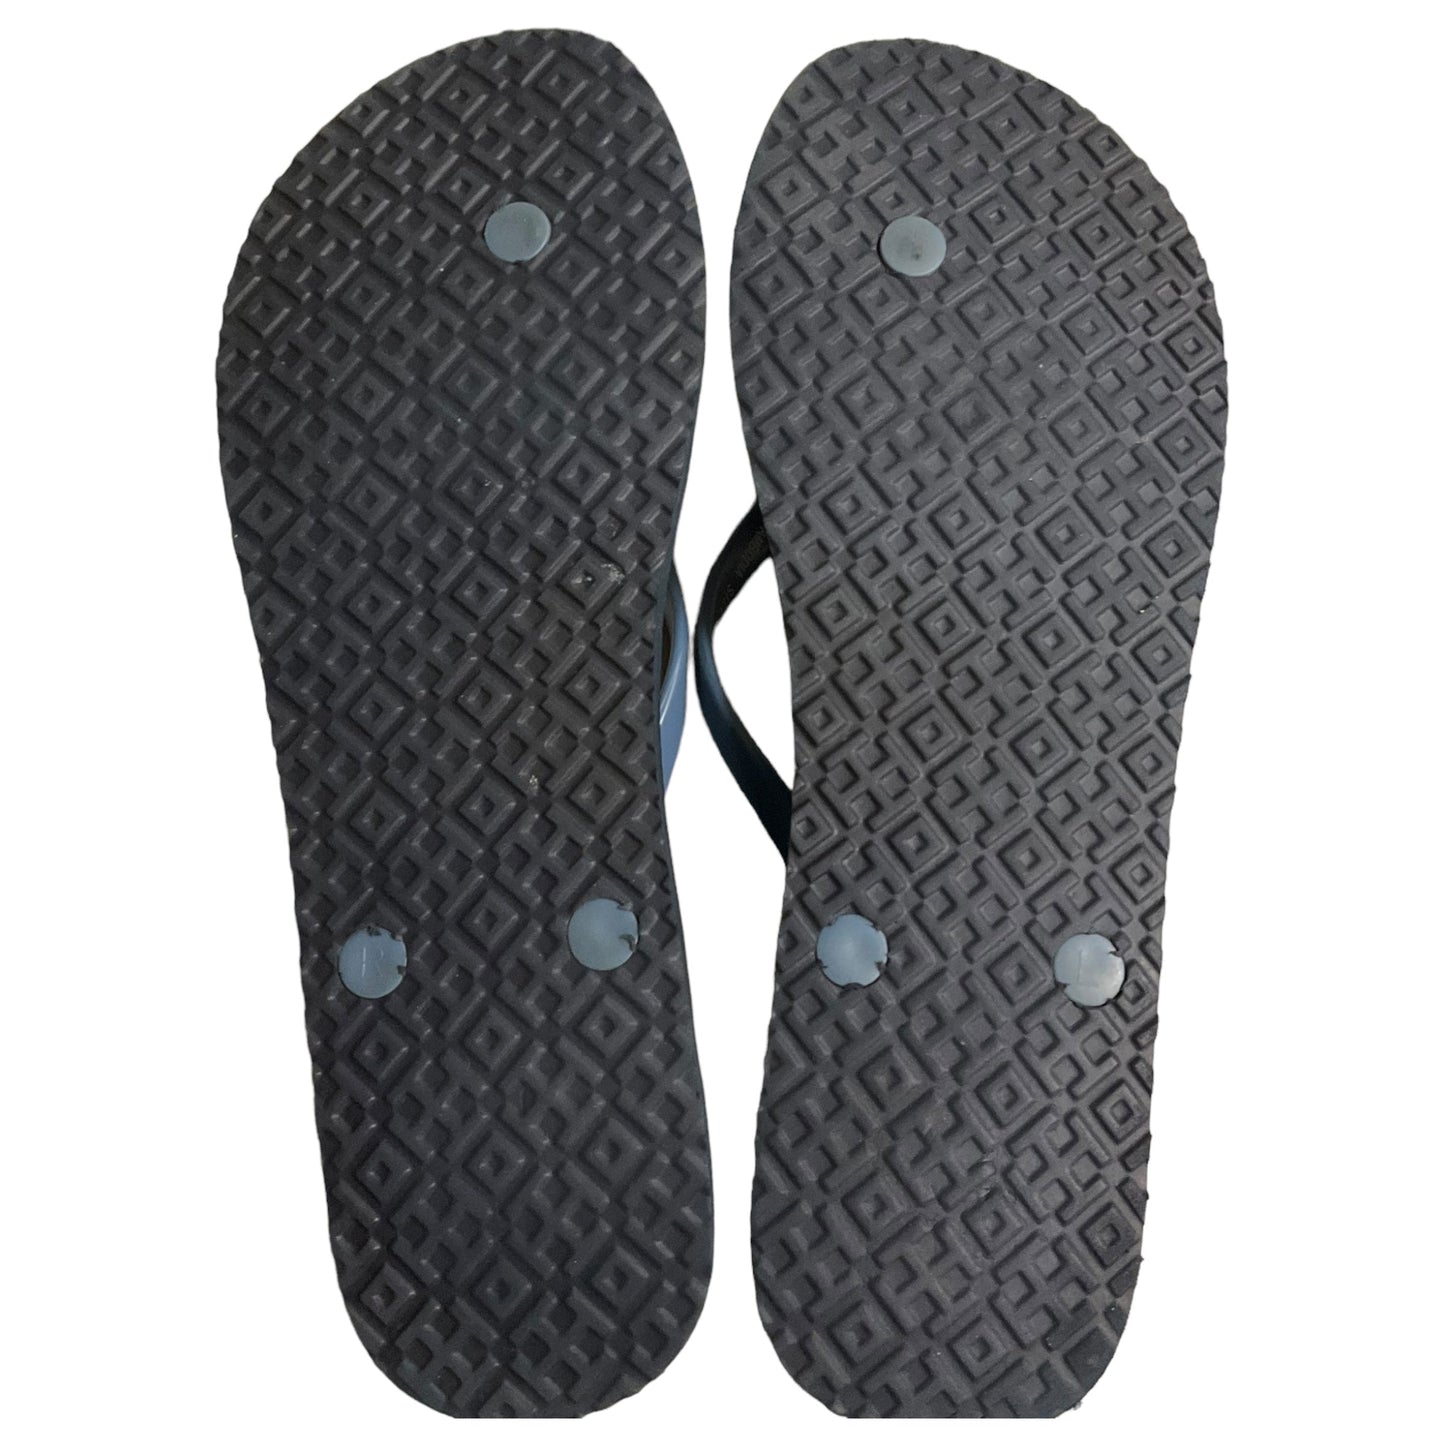 Blue Sandals Flip Flops Tory Burch, Size 10